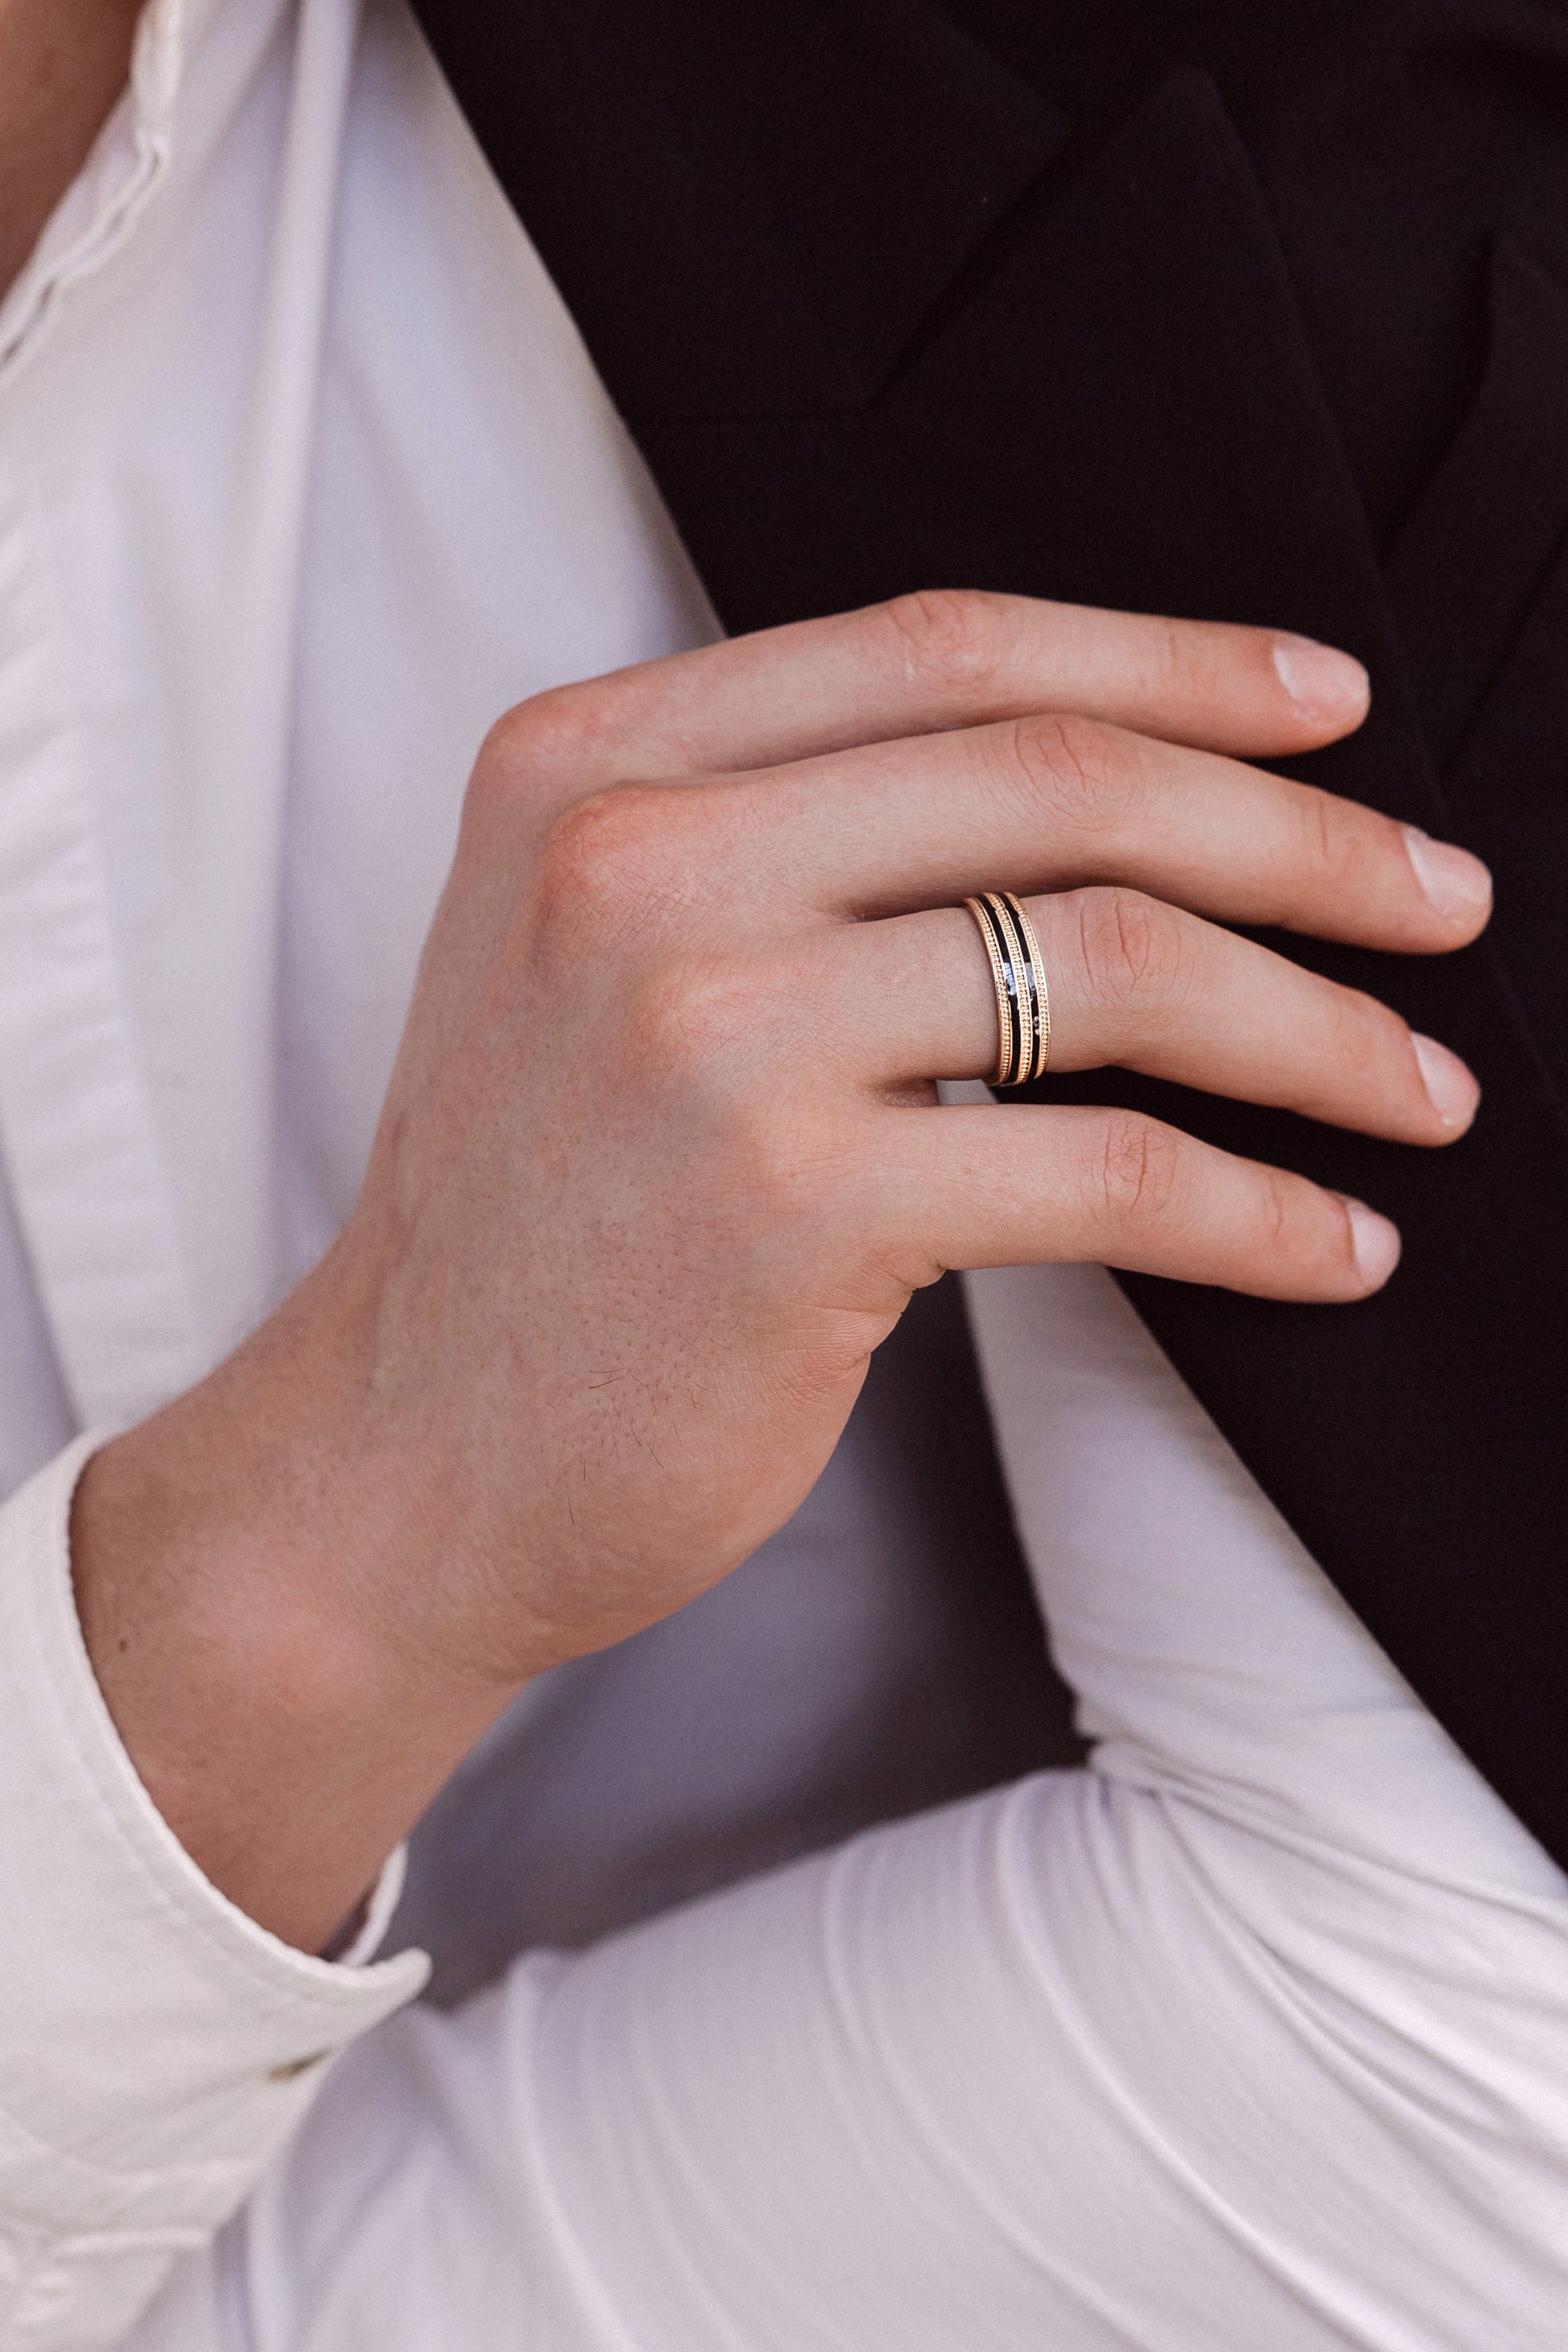 Men's wedding band. Black and gold wedding ring. Black enamel wedding band. Black wedding ring. Unique wedding band. Ring for him. Rose gold weddding ring. Black and gold band